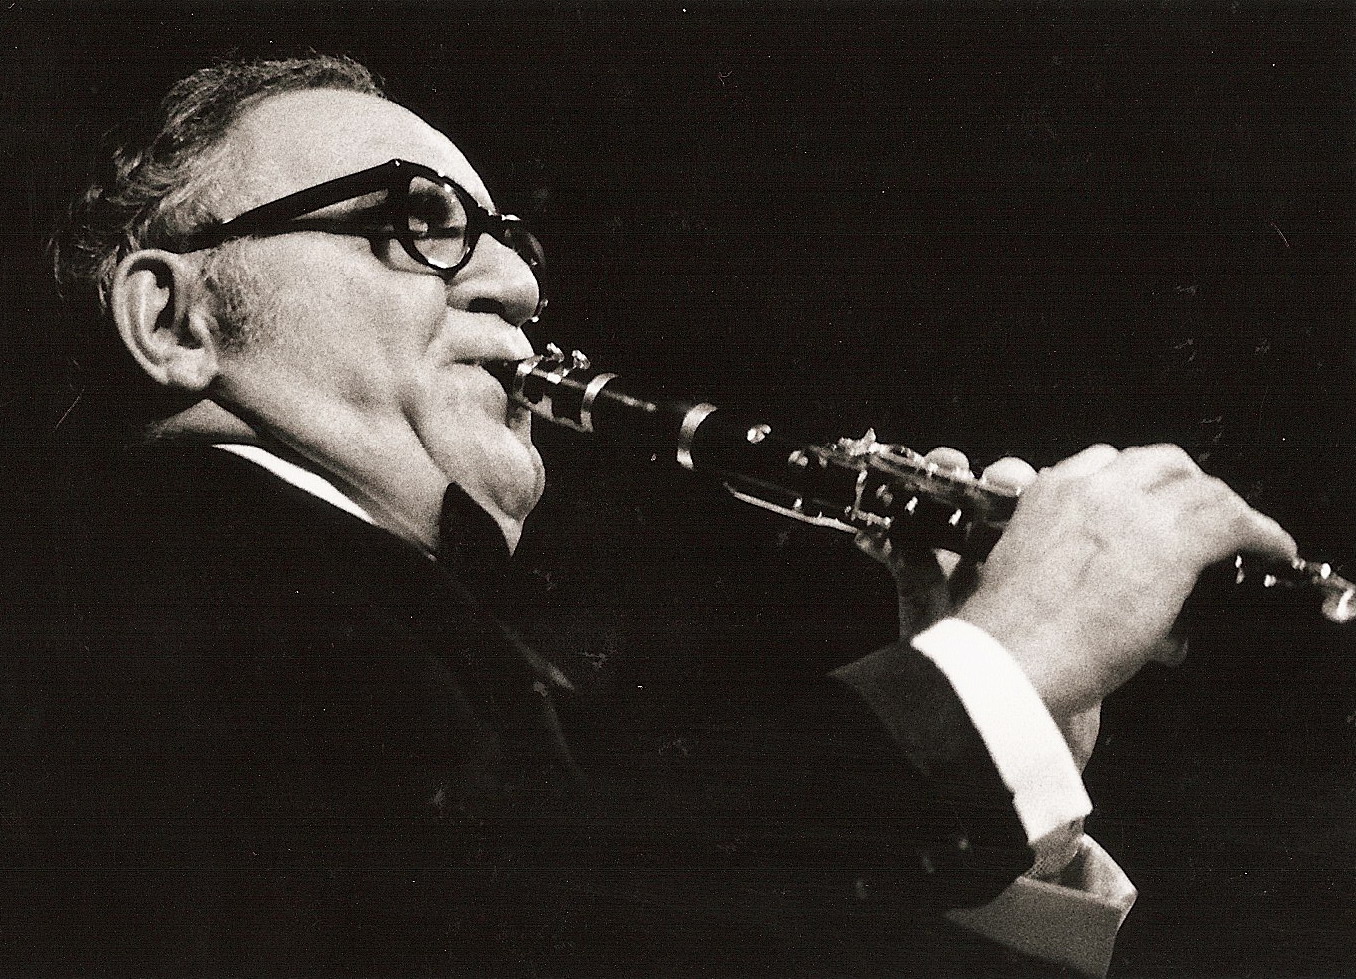 Benny Goodman: ricordando "The King of Swing"